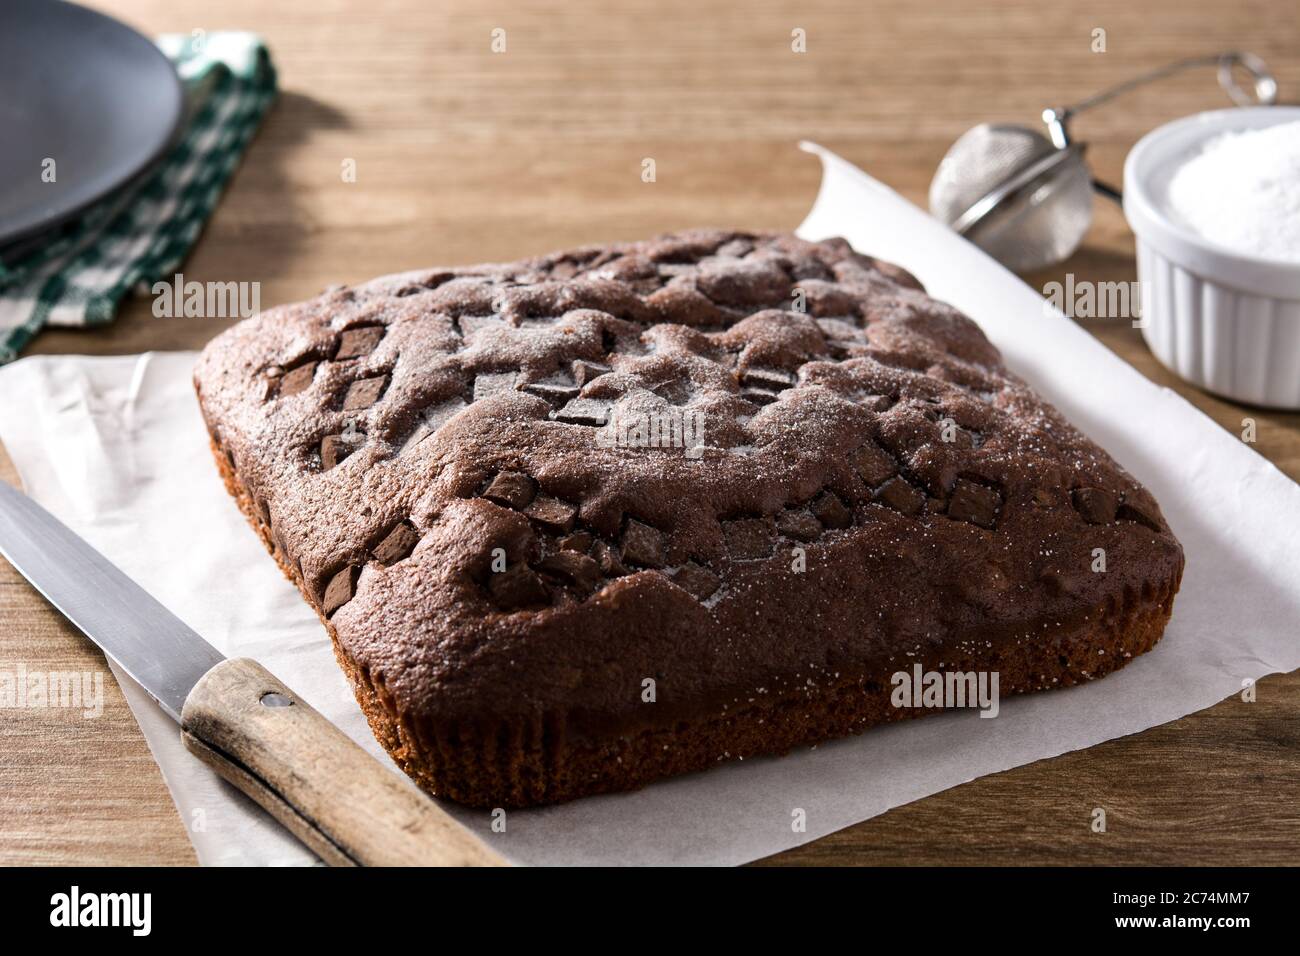 Sweet chocolate sponge cake on wooden table Stock Photo